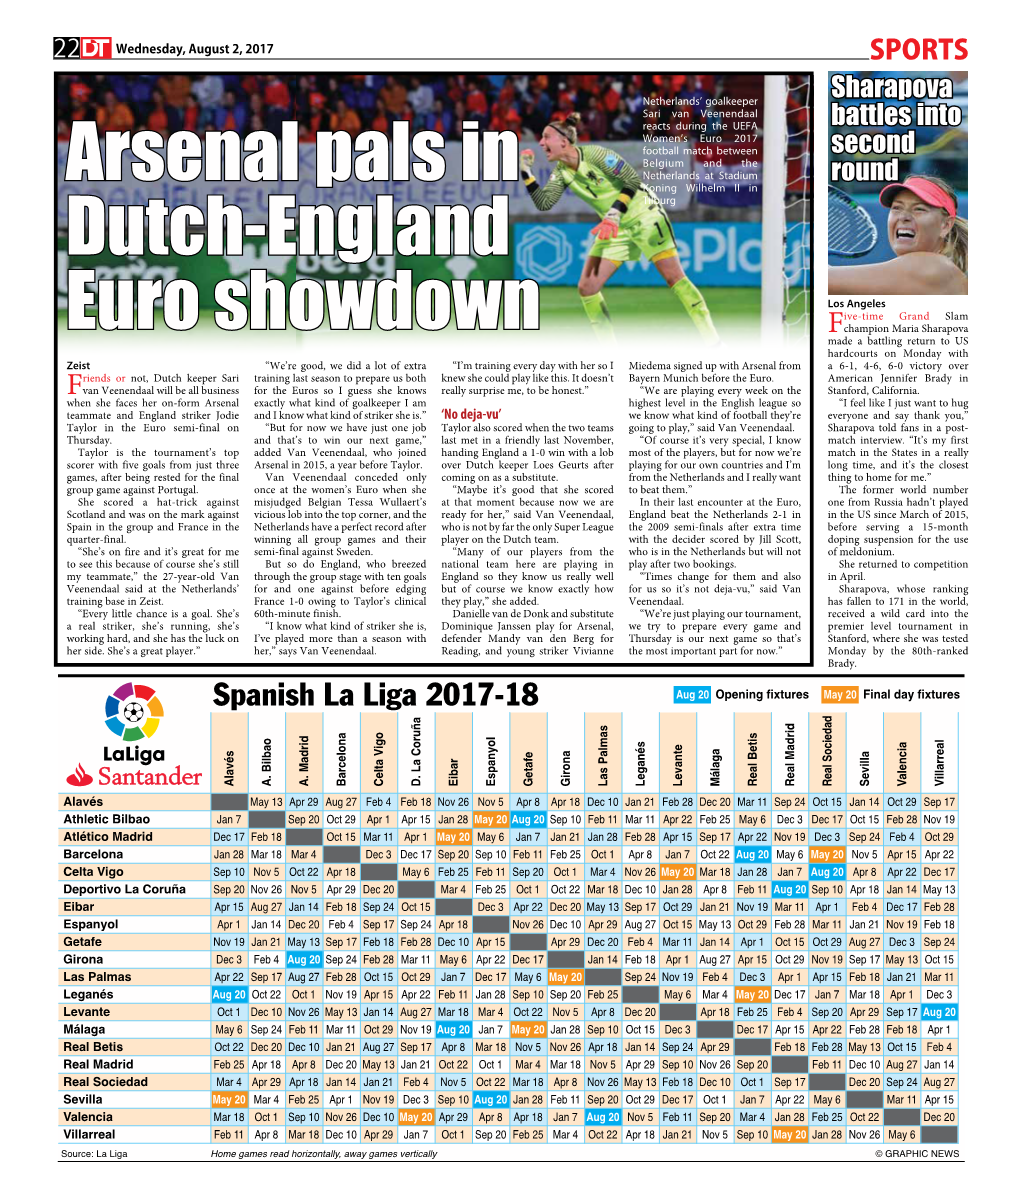 Arsenal Pals in Dutch-England Euro Showdown